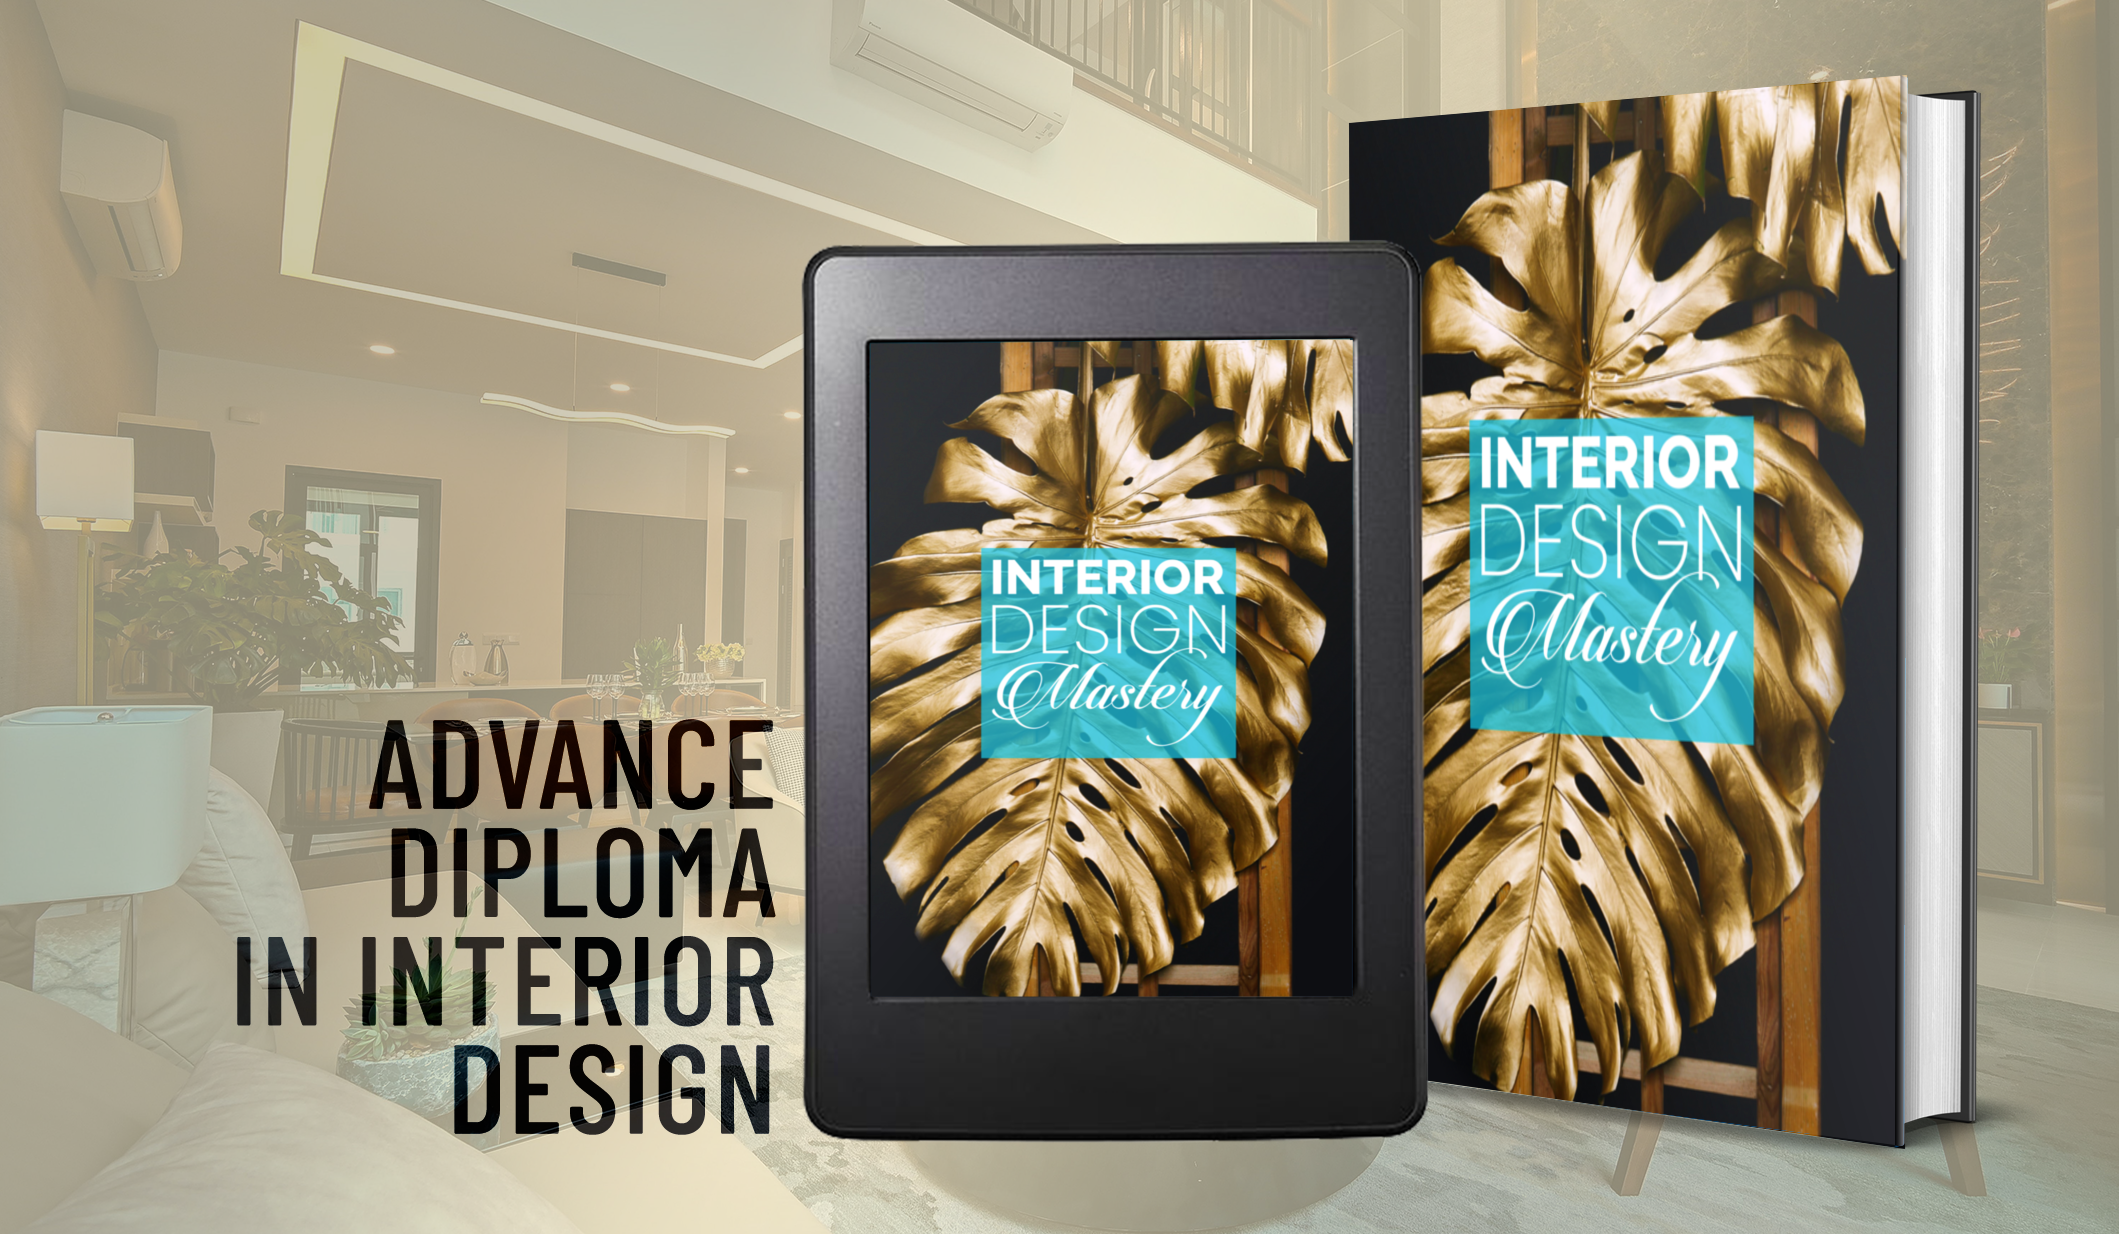 Interior Design Mastery [Advance Diploma Course]